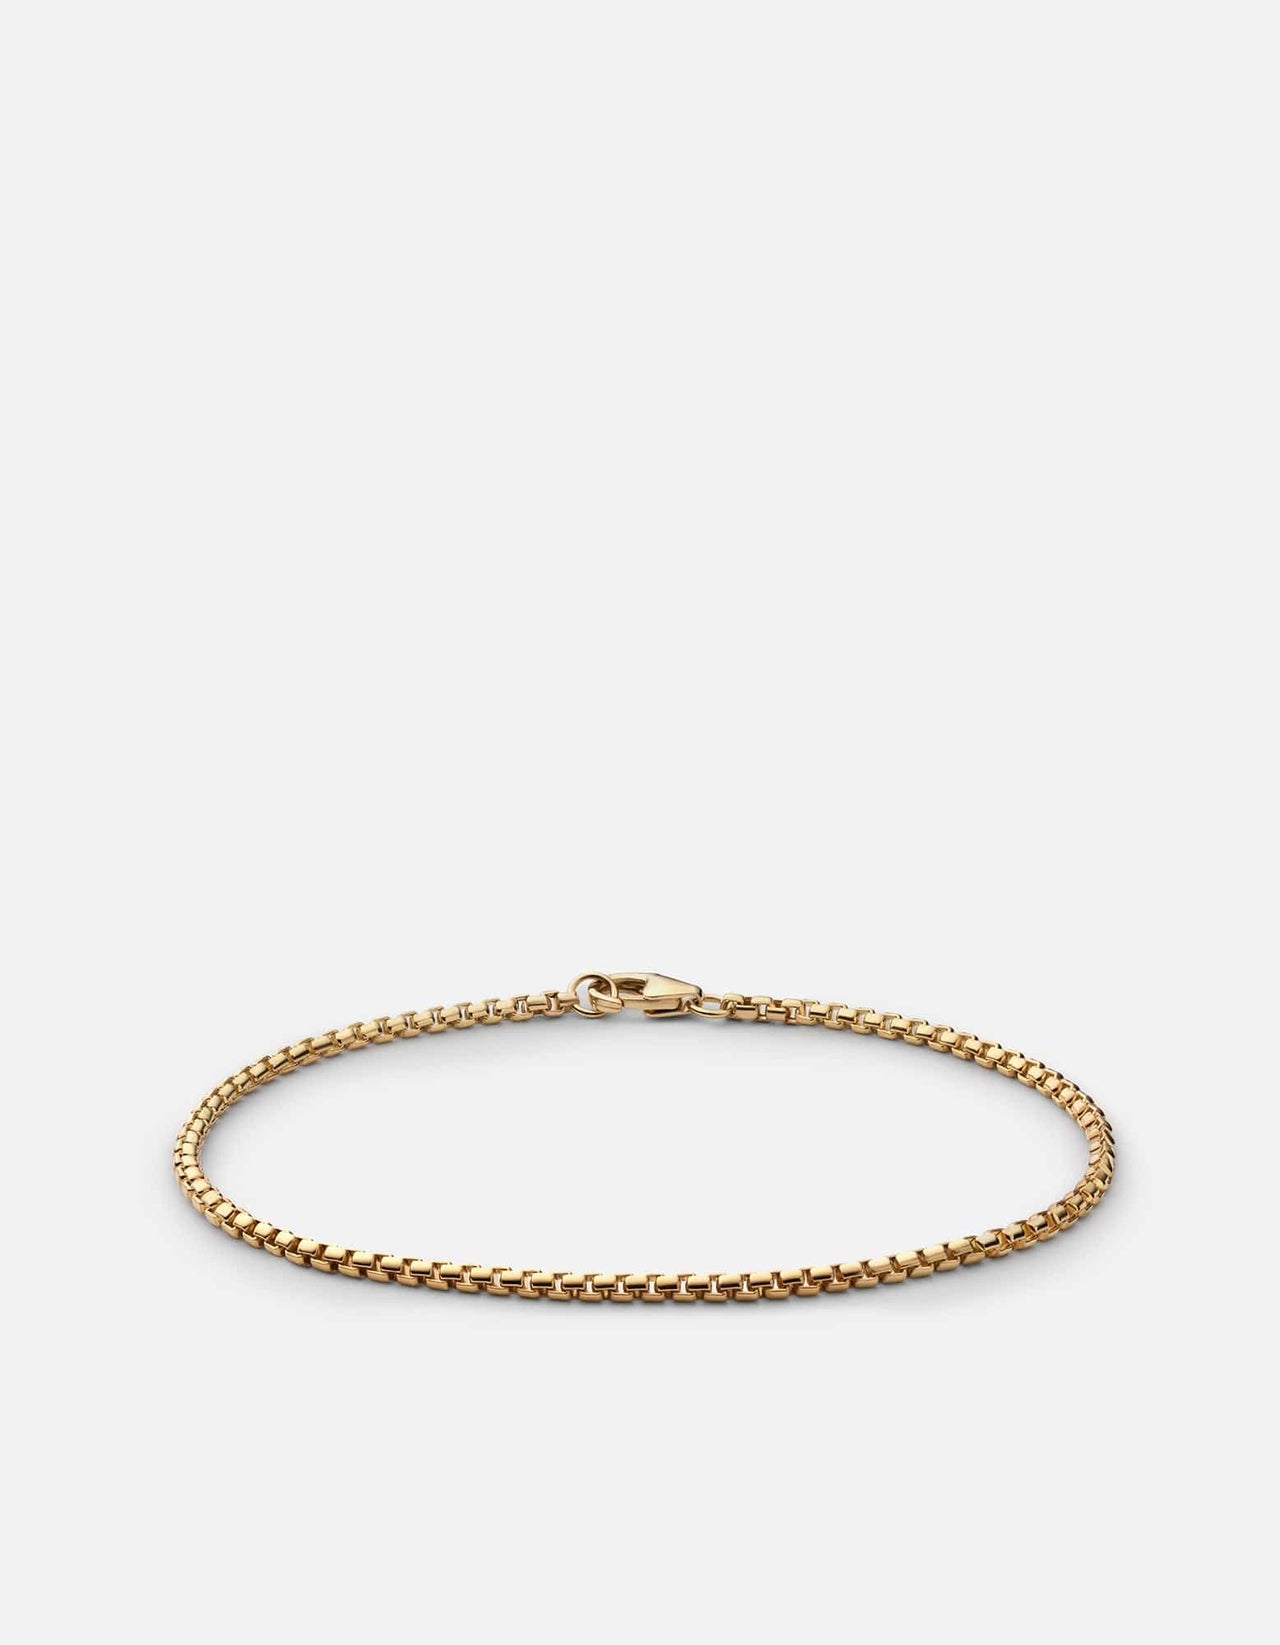 14K Gold Chain Link Bracelet, Solid Gold Bracelet, Petite Oval